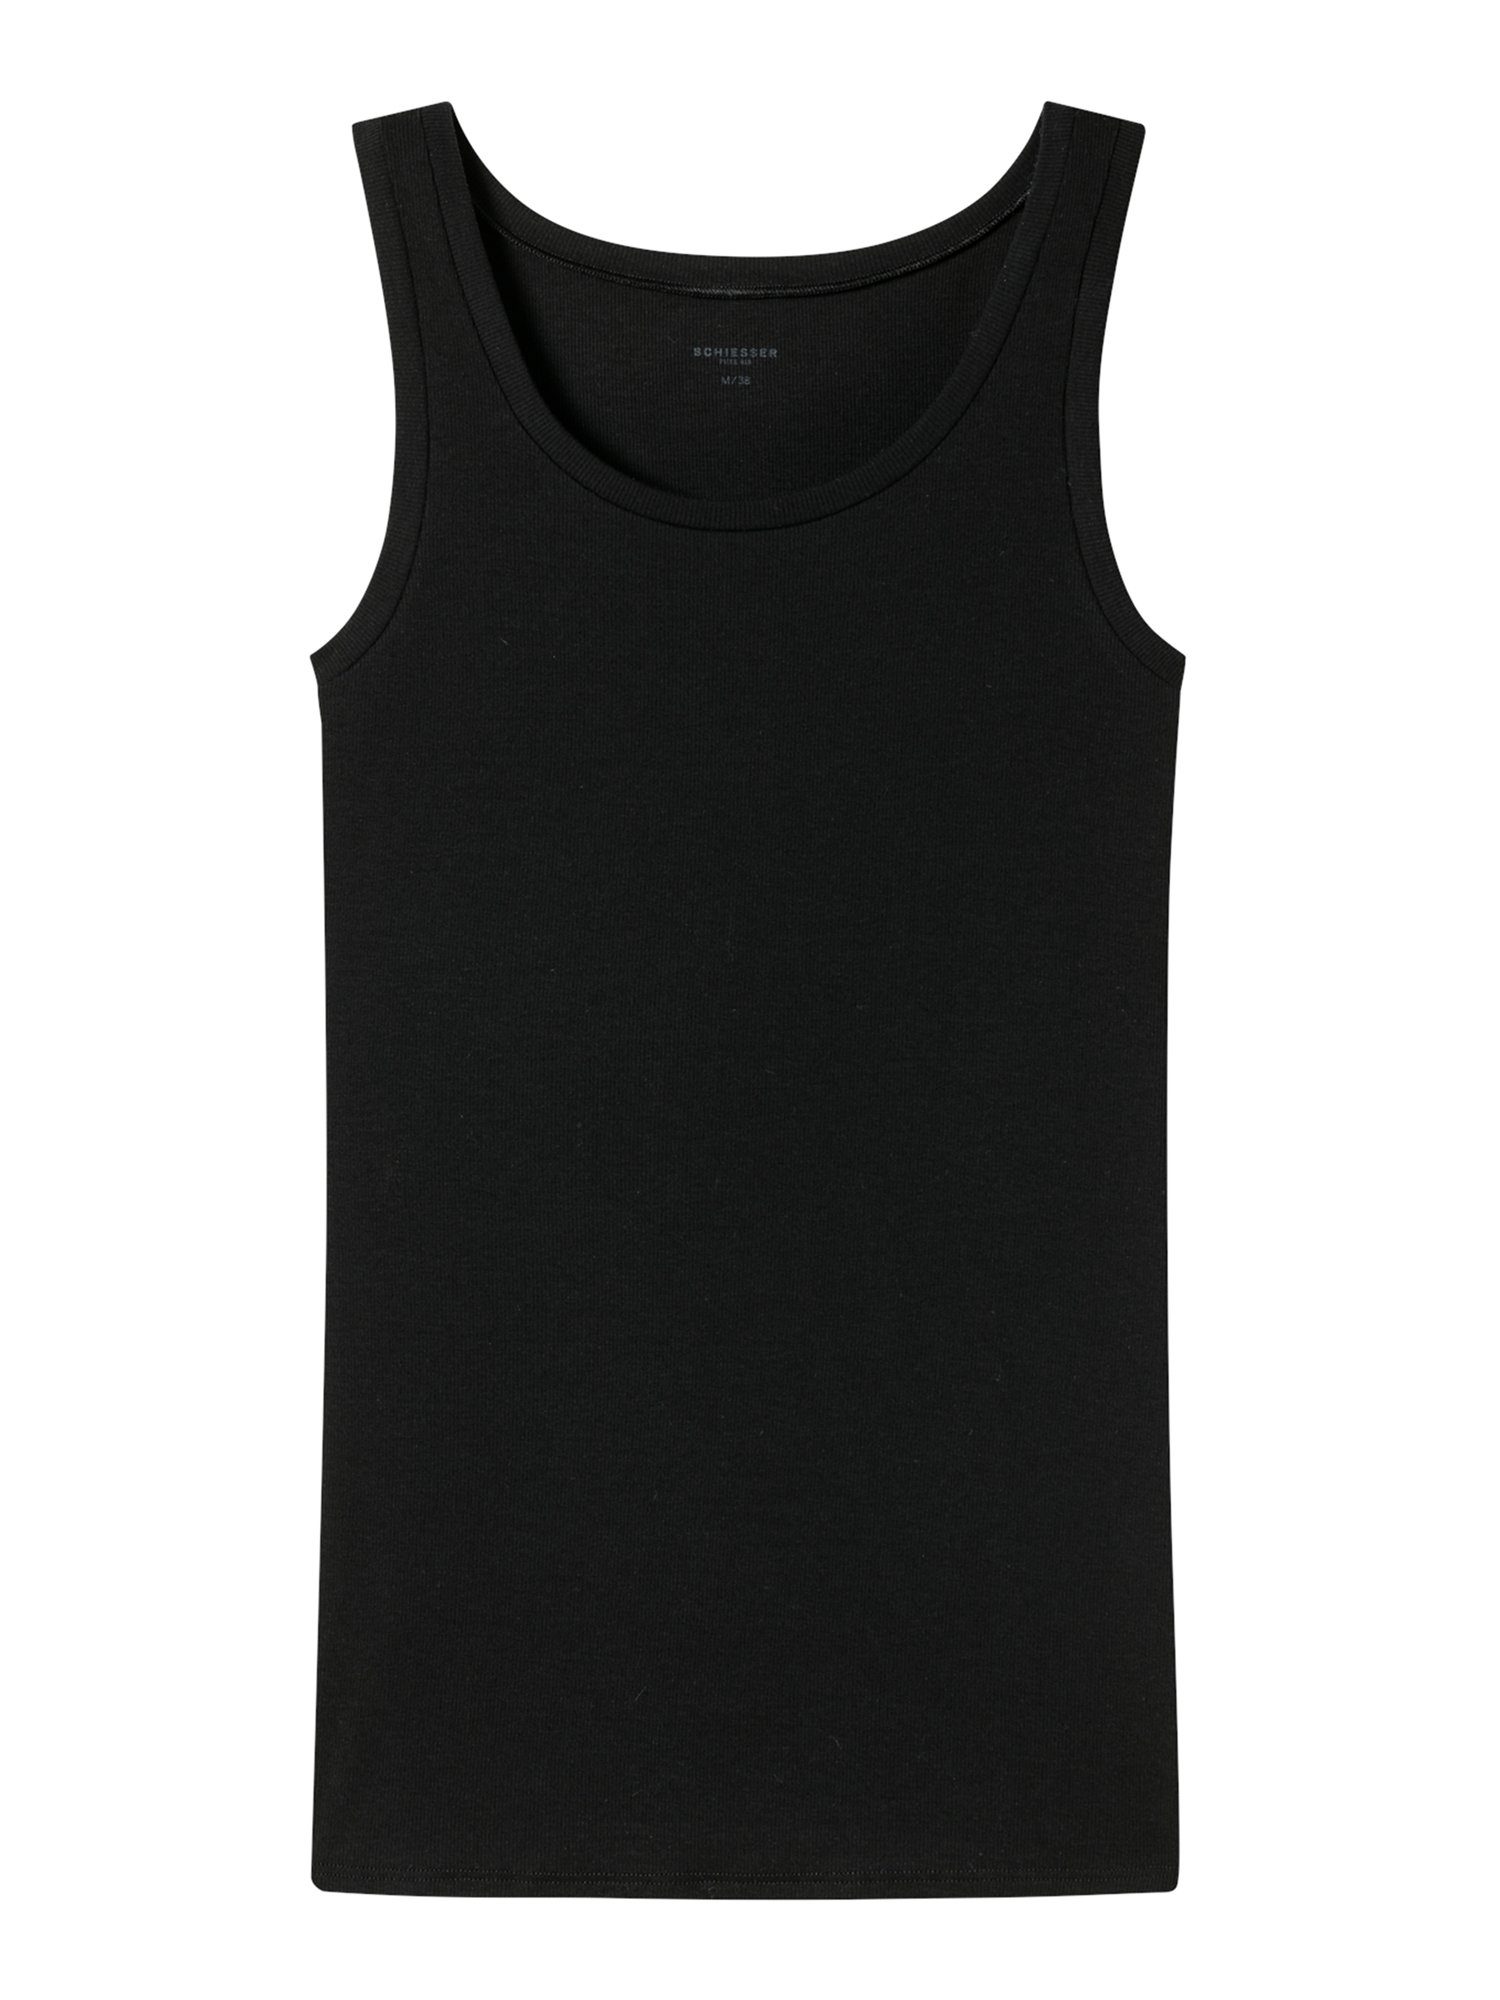 Schiesser Tanktop Pure Rib Tank-top unterhemd unterzieh-shirt schwarz